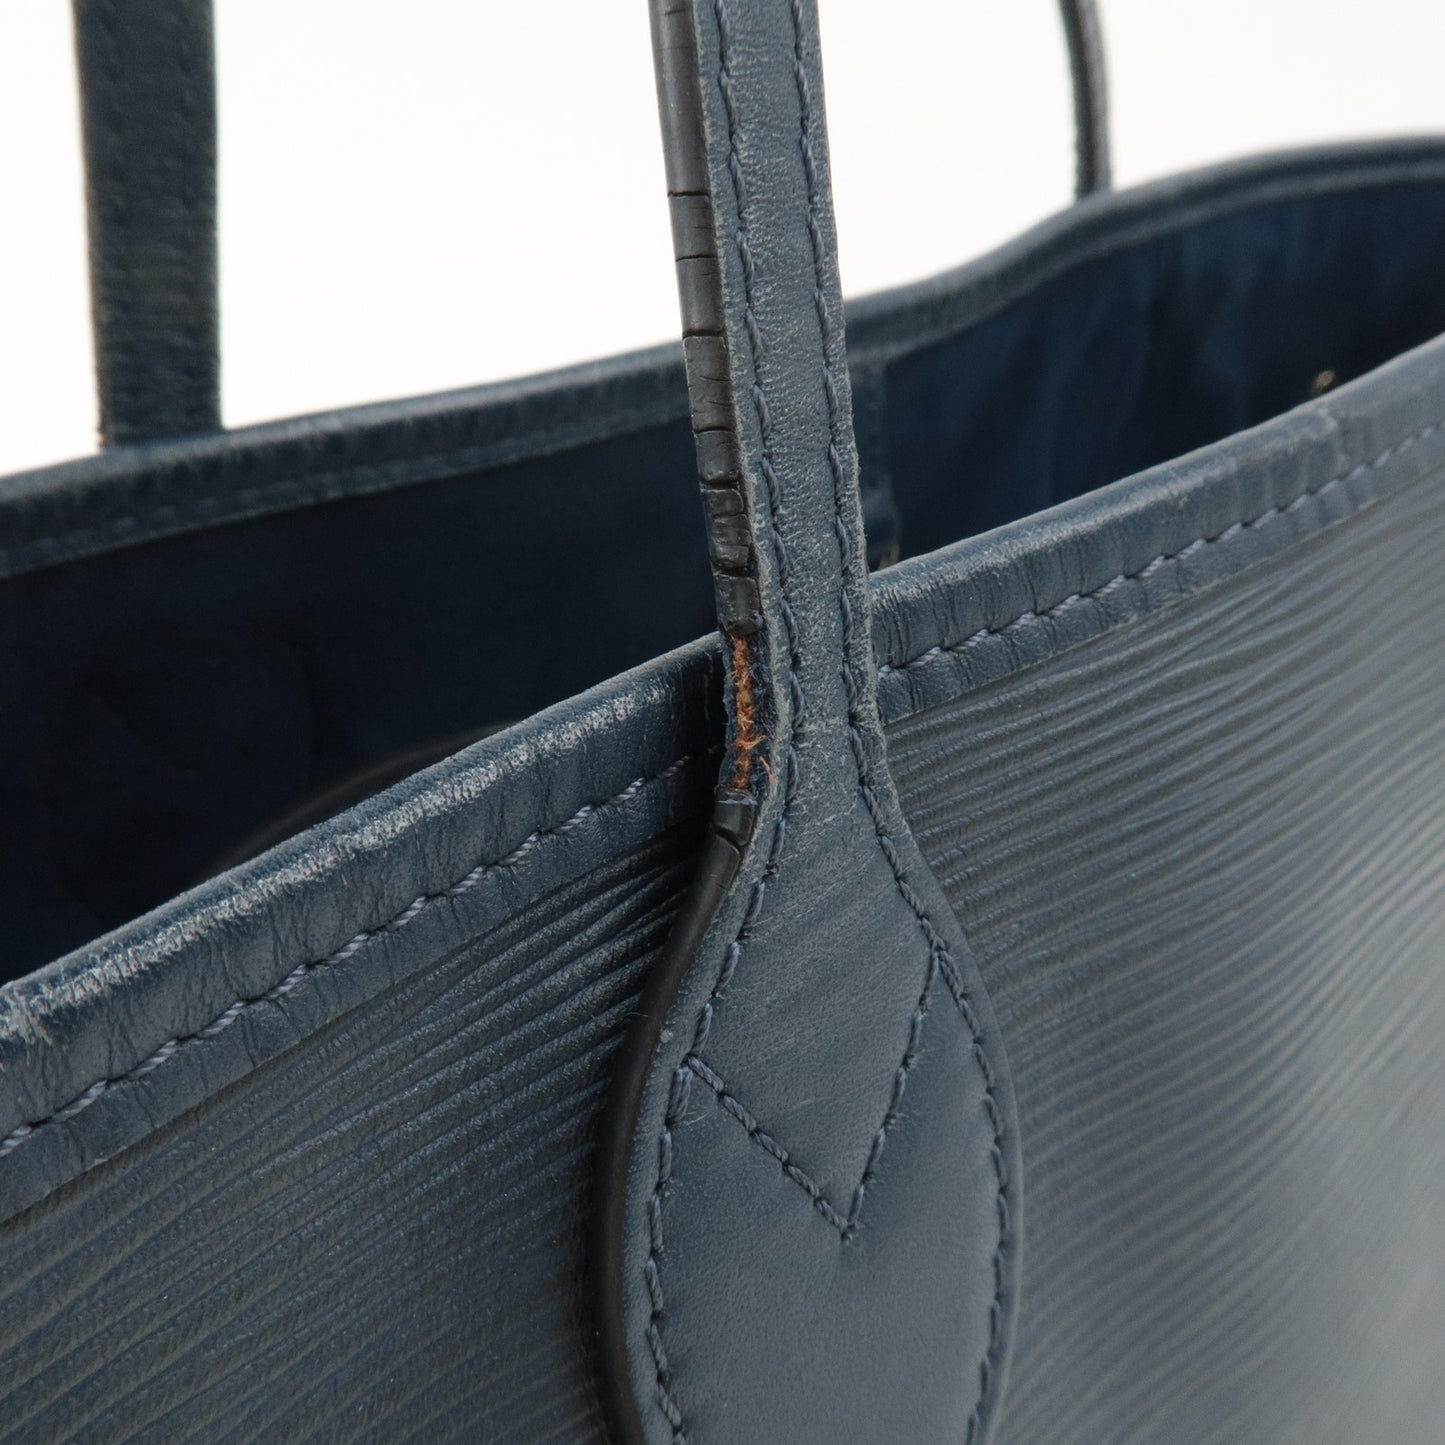 Louis Vuitton Epi Neverfull MM Shoulder Bag Andigo Blue M40885